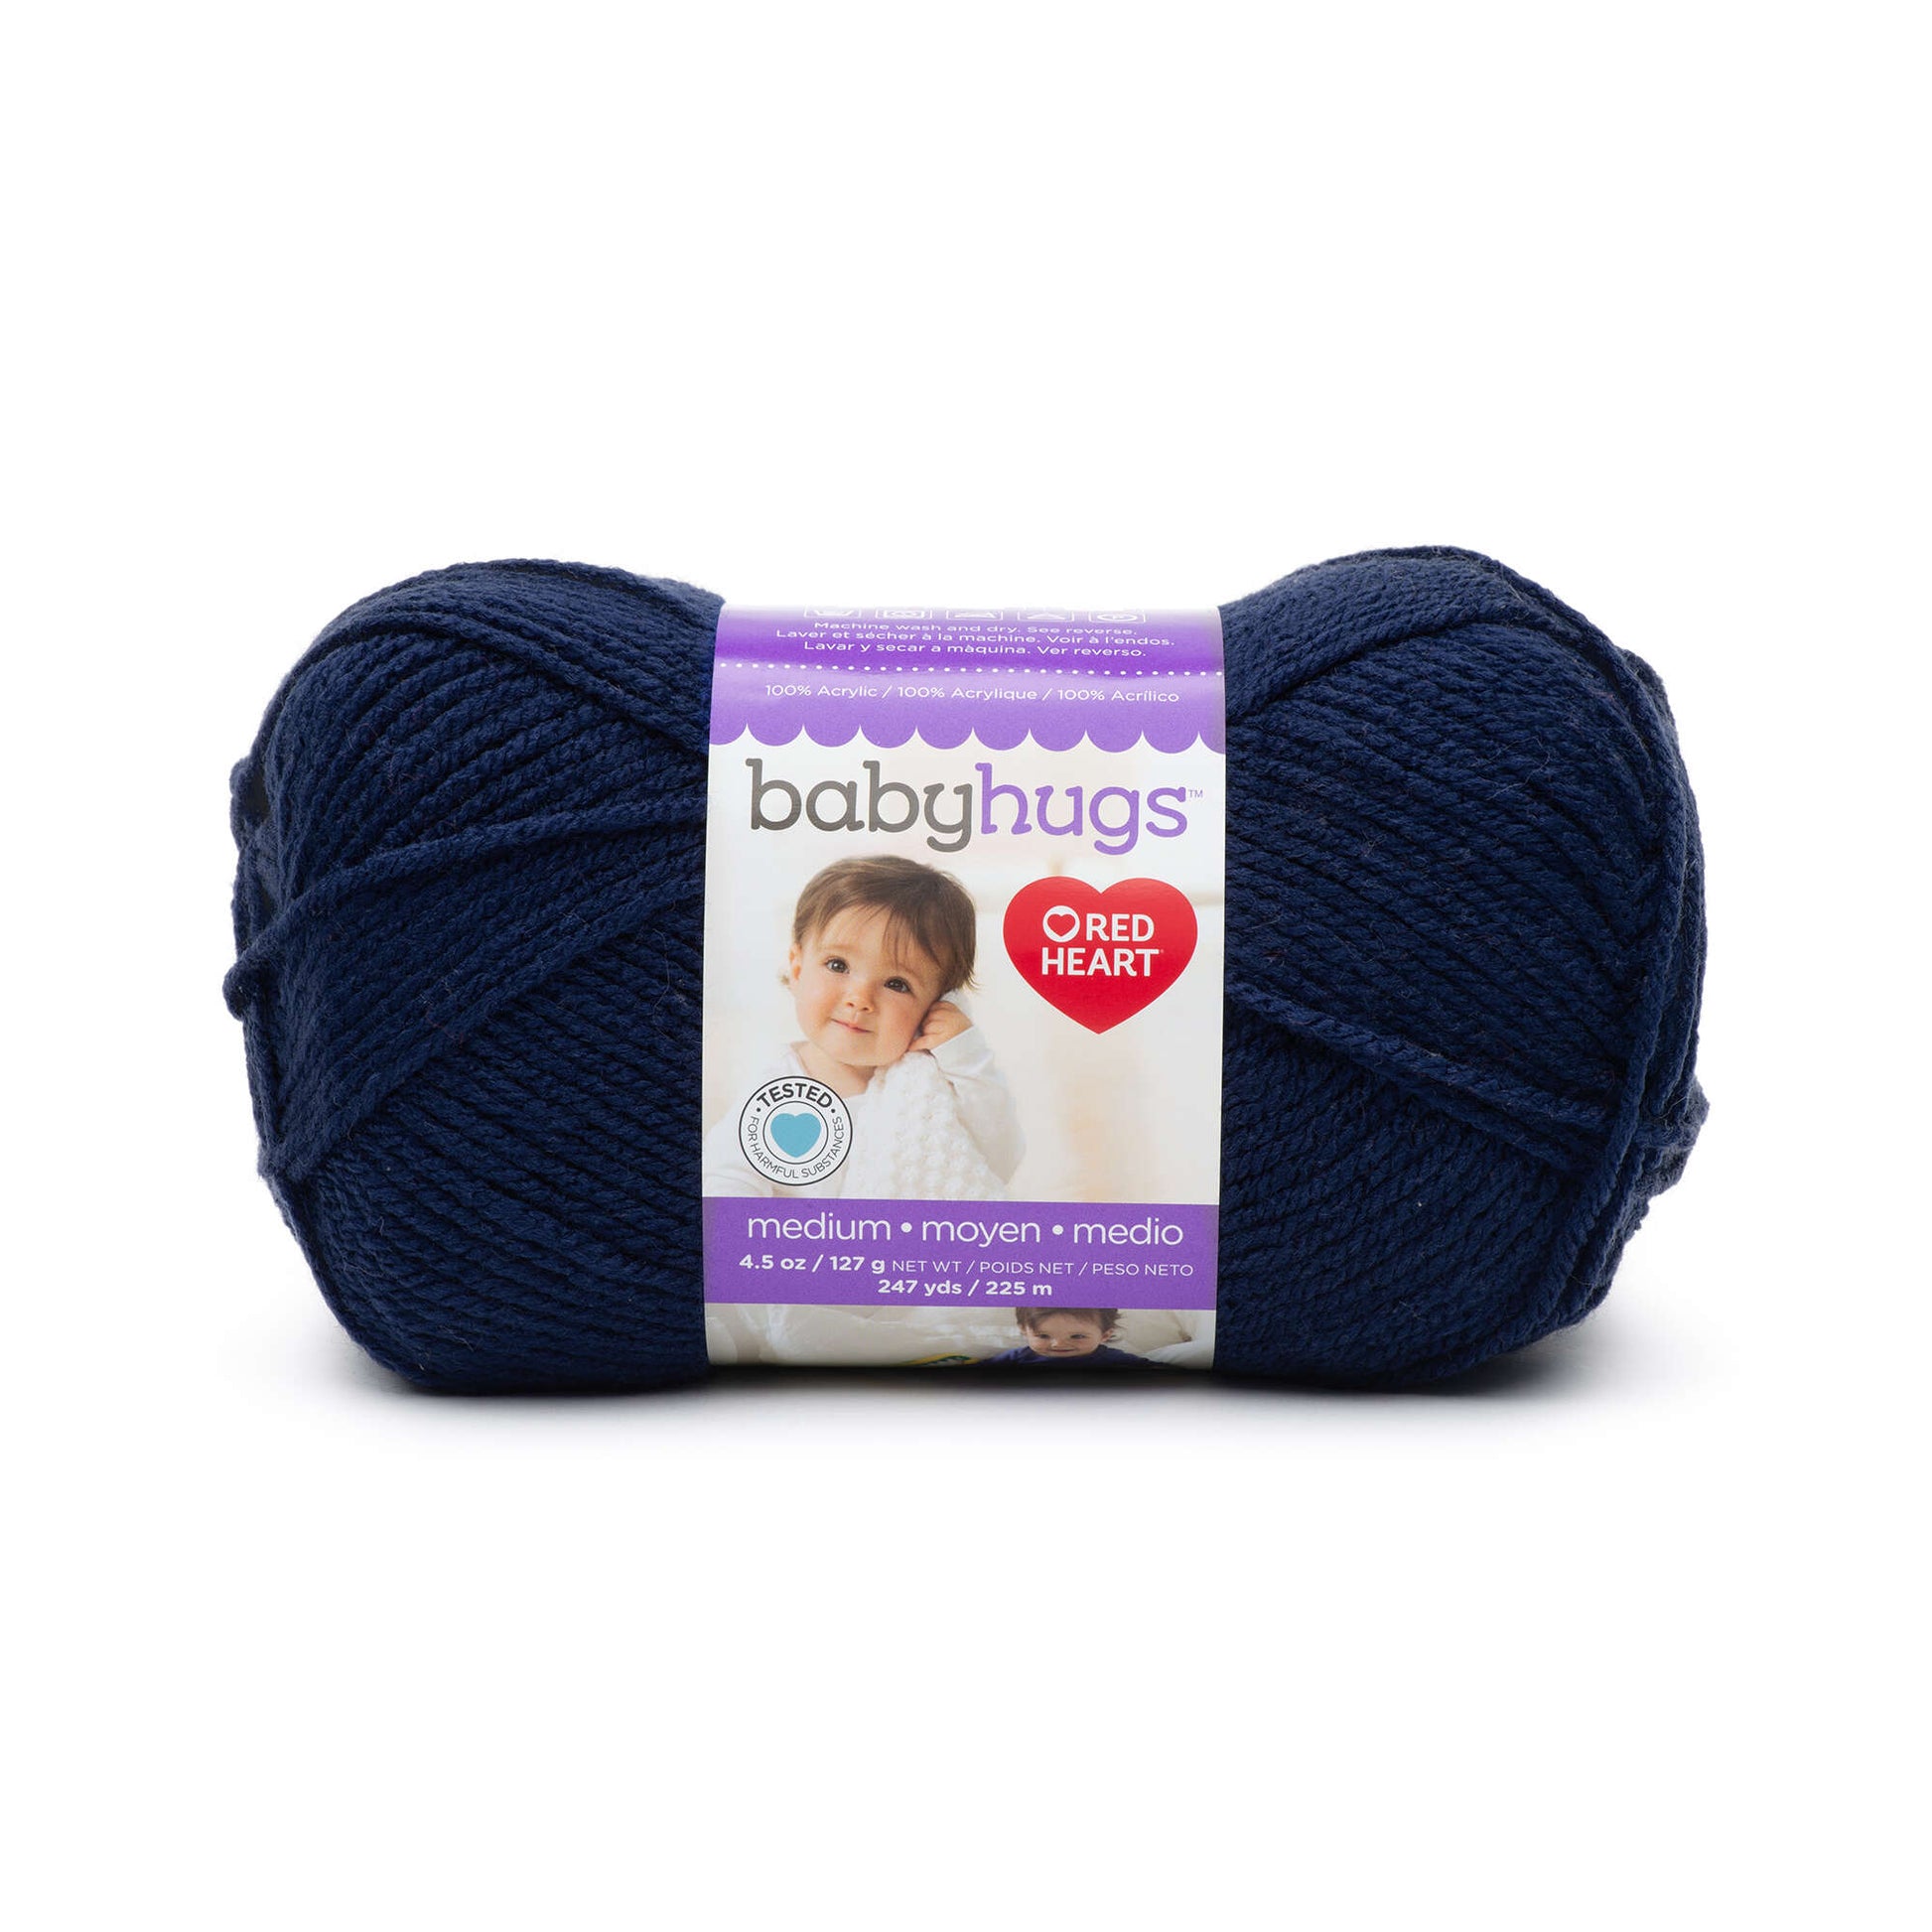 Red Heart Baby Hugs Medium Yarn - Discontinued shades Blueberry